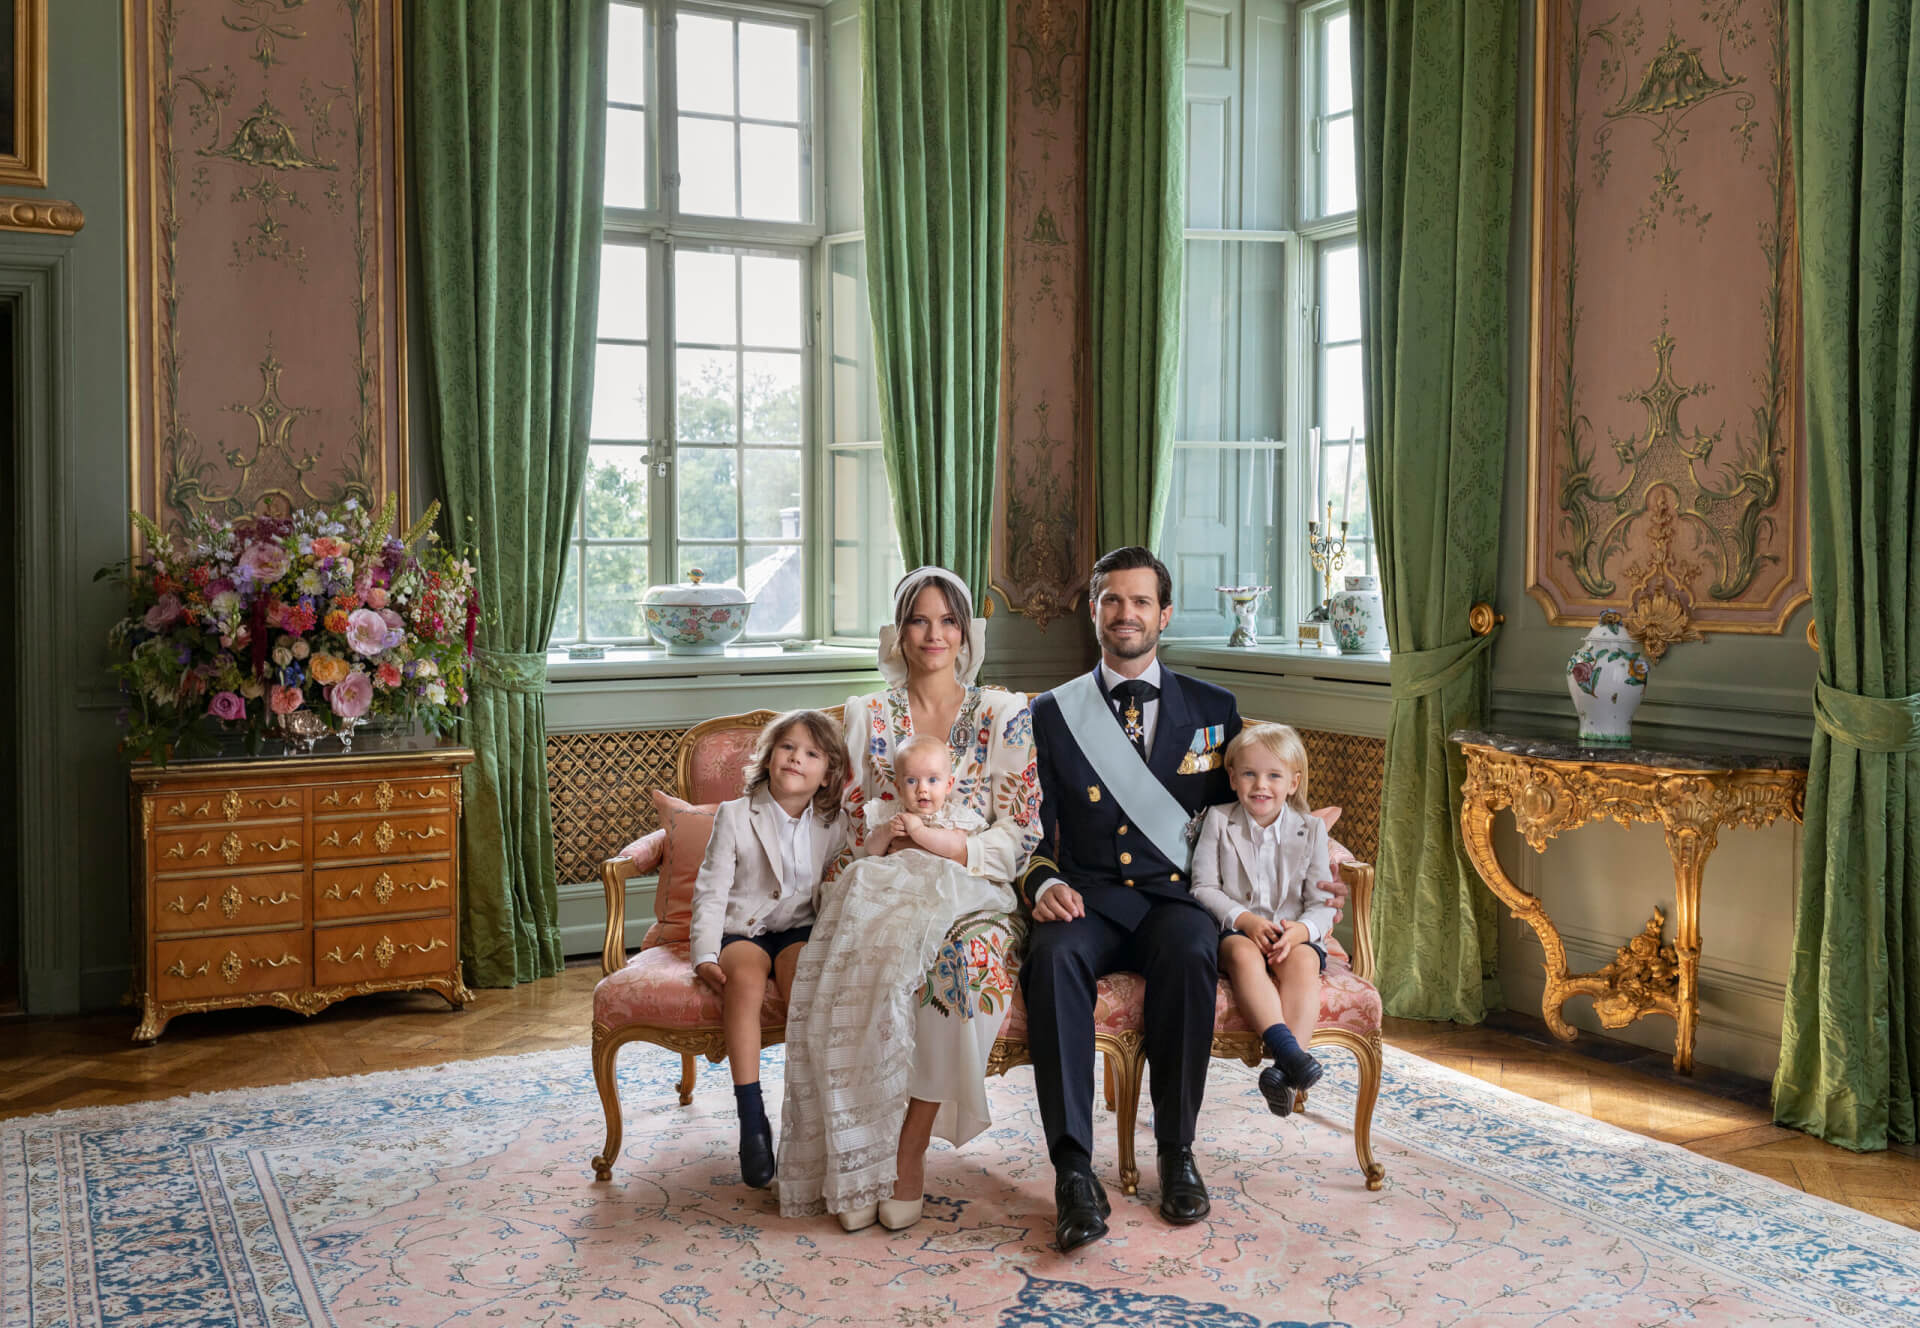 Swedish Royal Family Prince Carl Philip and Sofia of Sweden